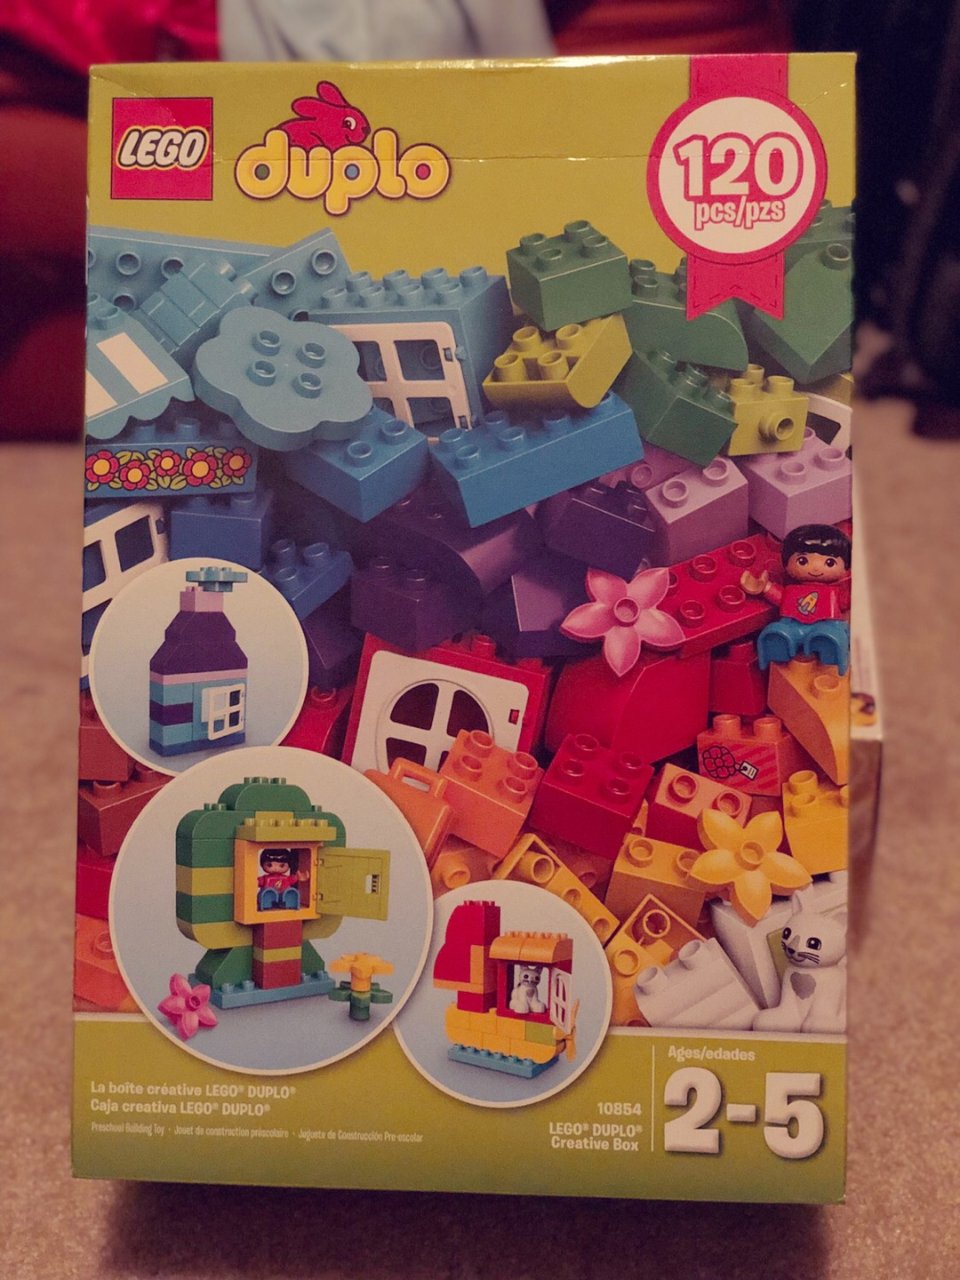 Lego 乐高,乐高迷,19.99美元